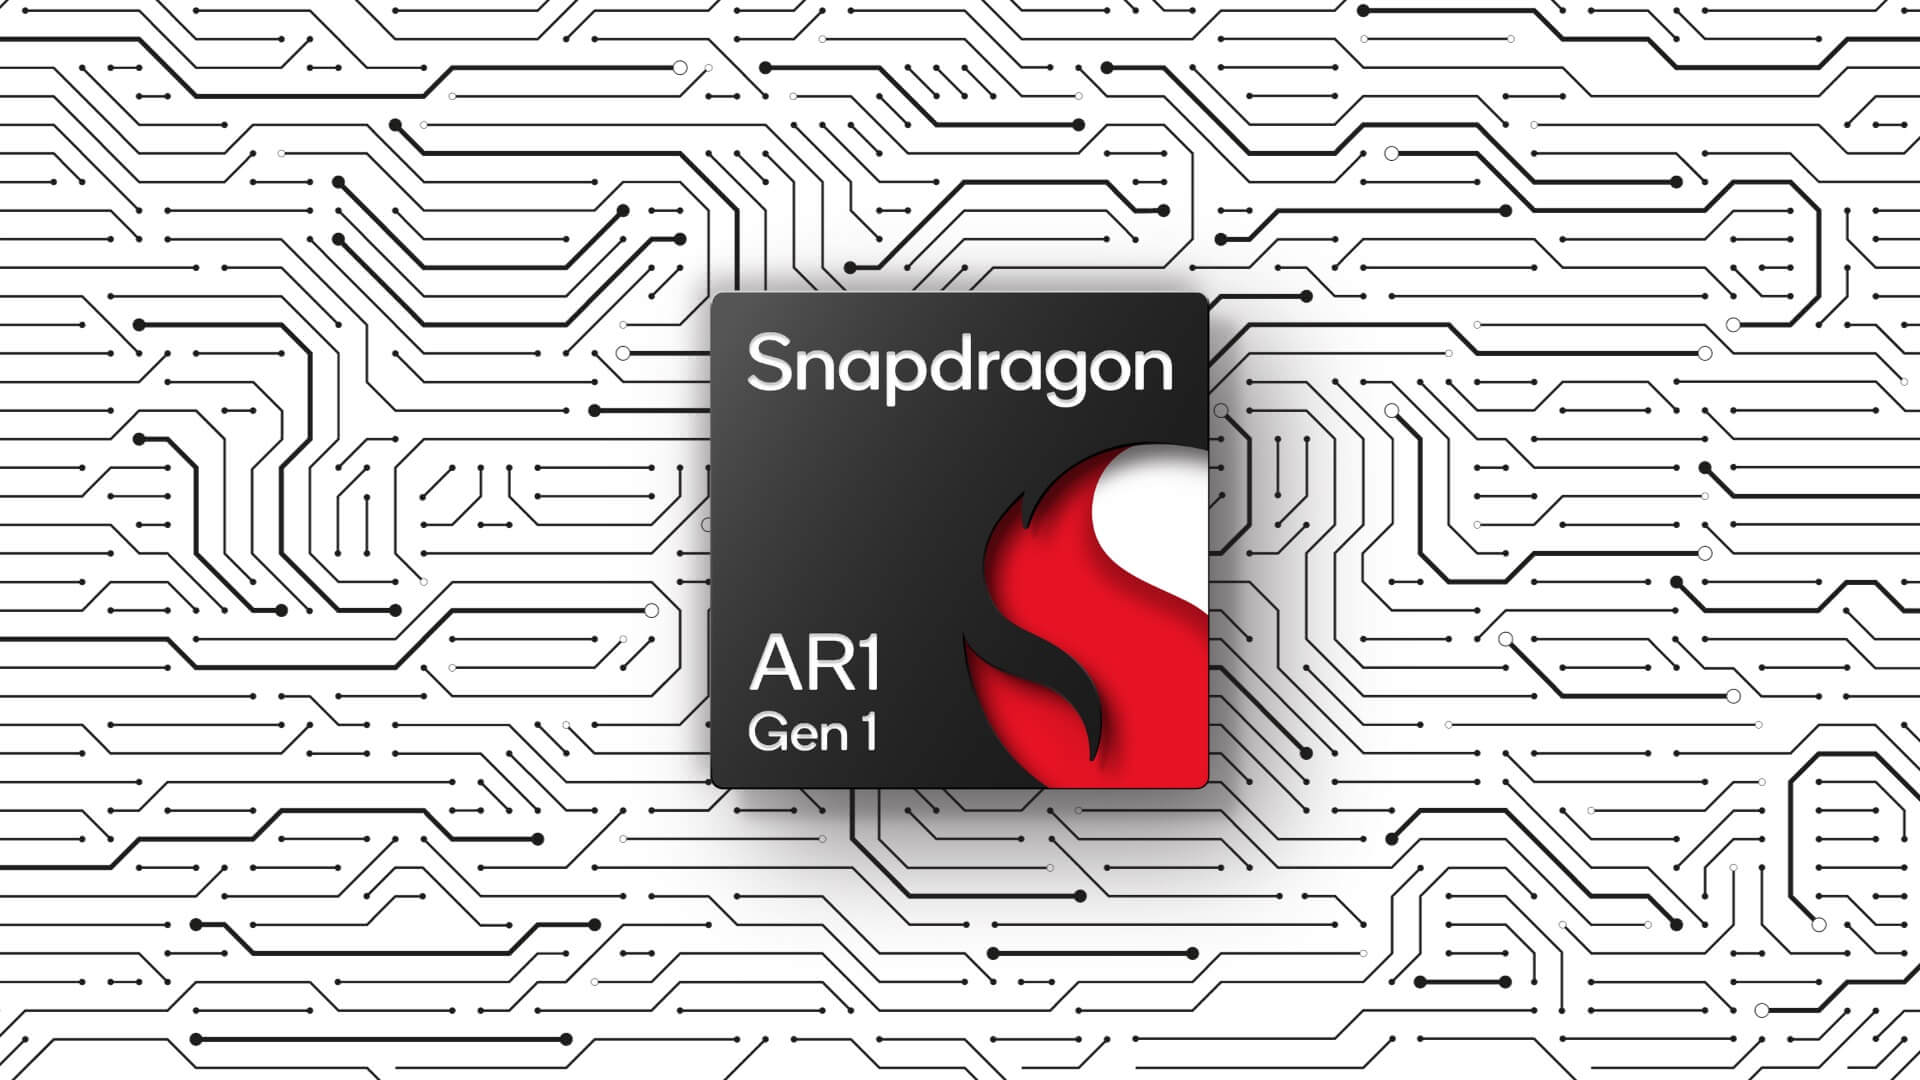 Snapdragon AR1 Gen 1